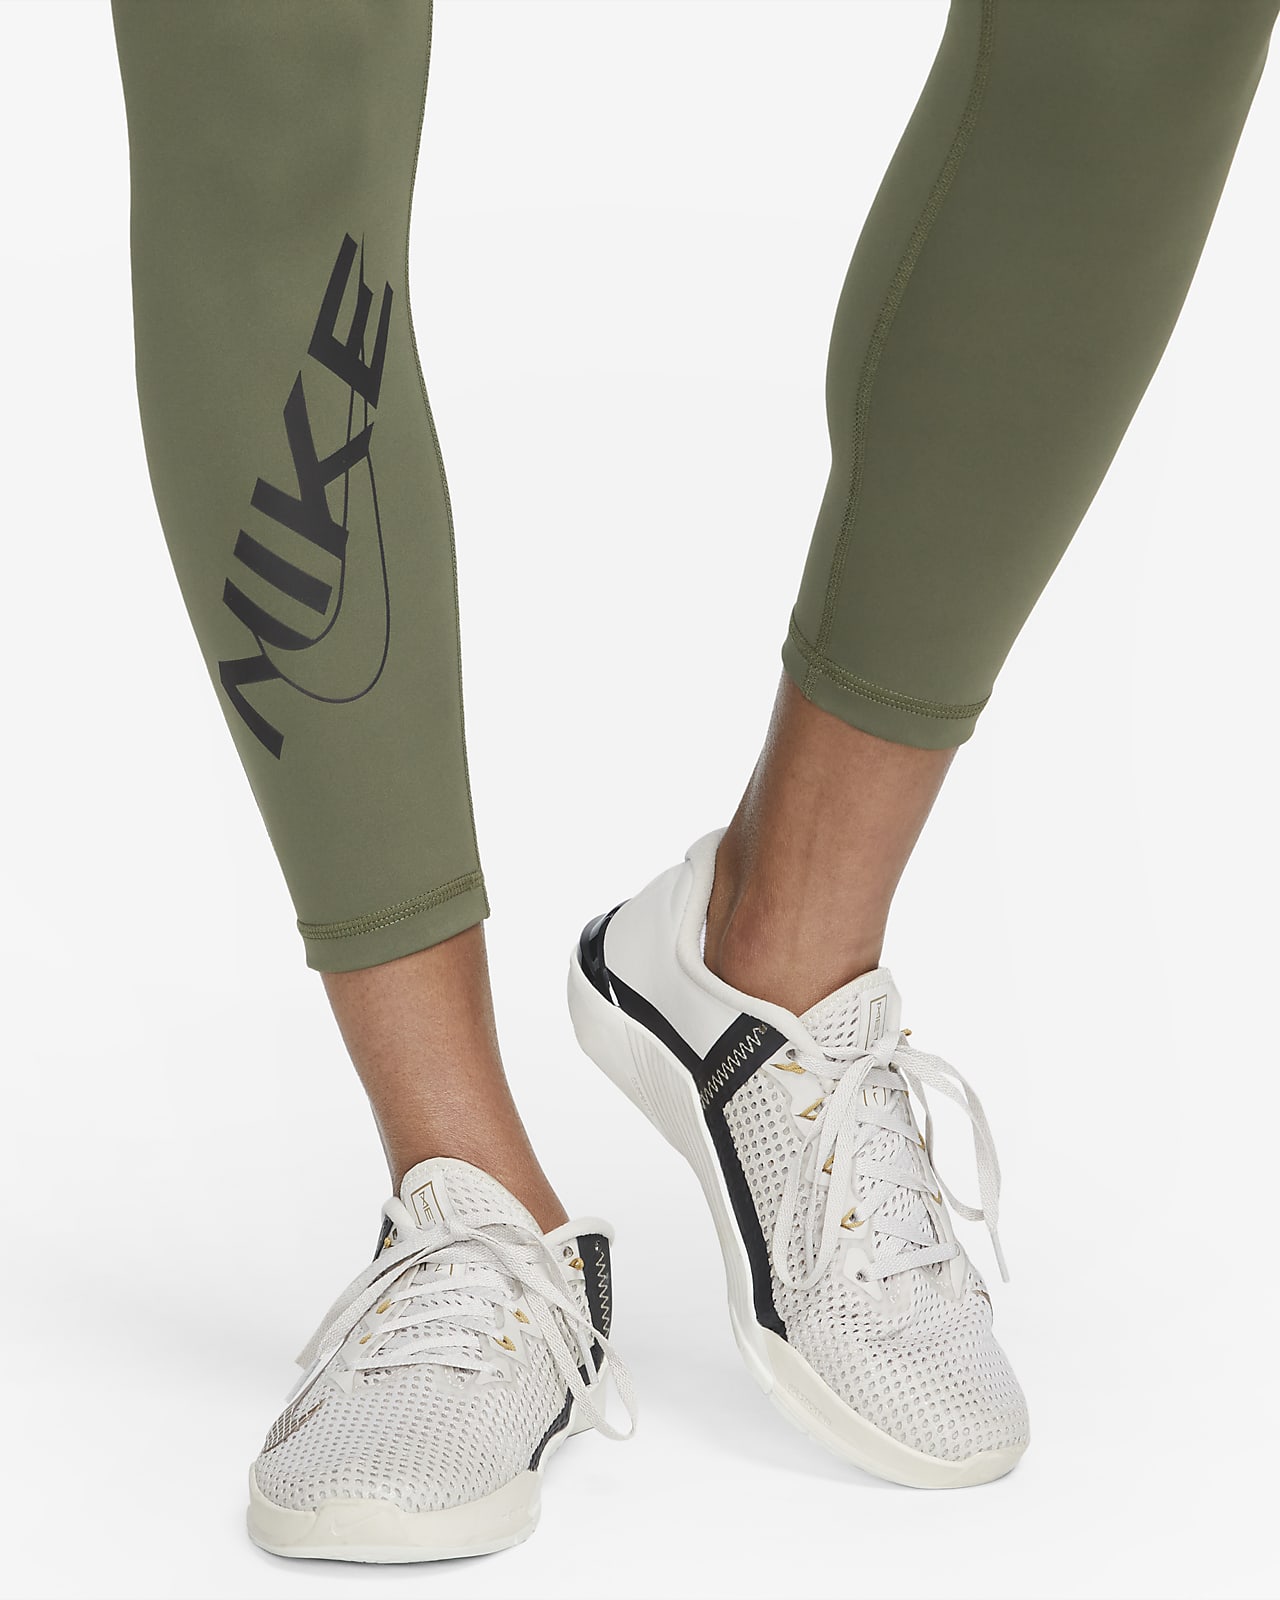 Nike Pro Women's Mid-Rise 7/8 Leggings (FB5700) desde 34,99